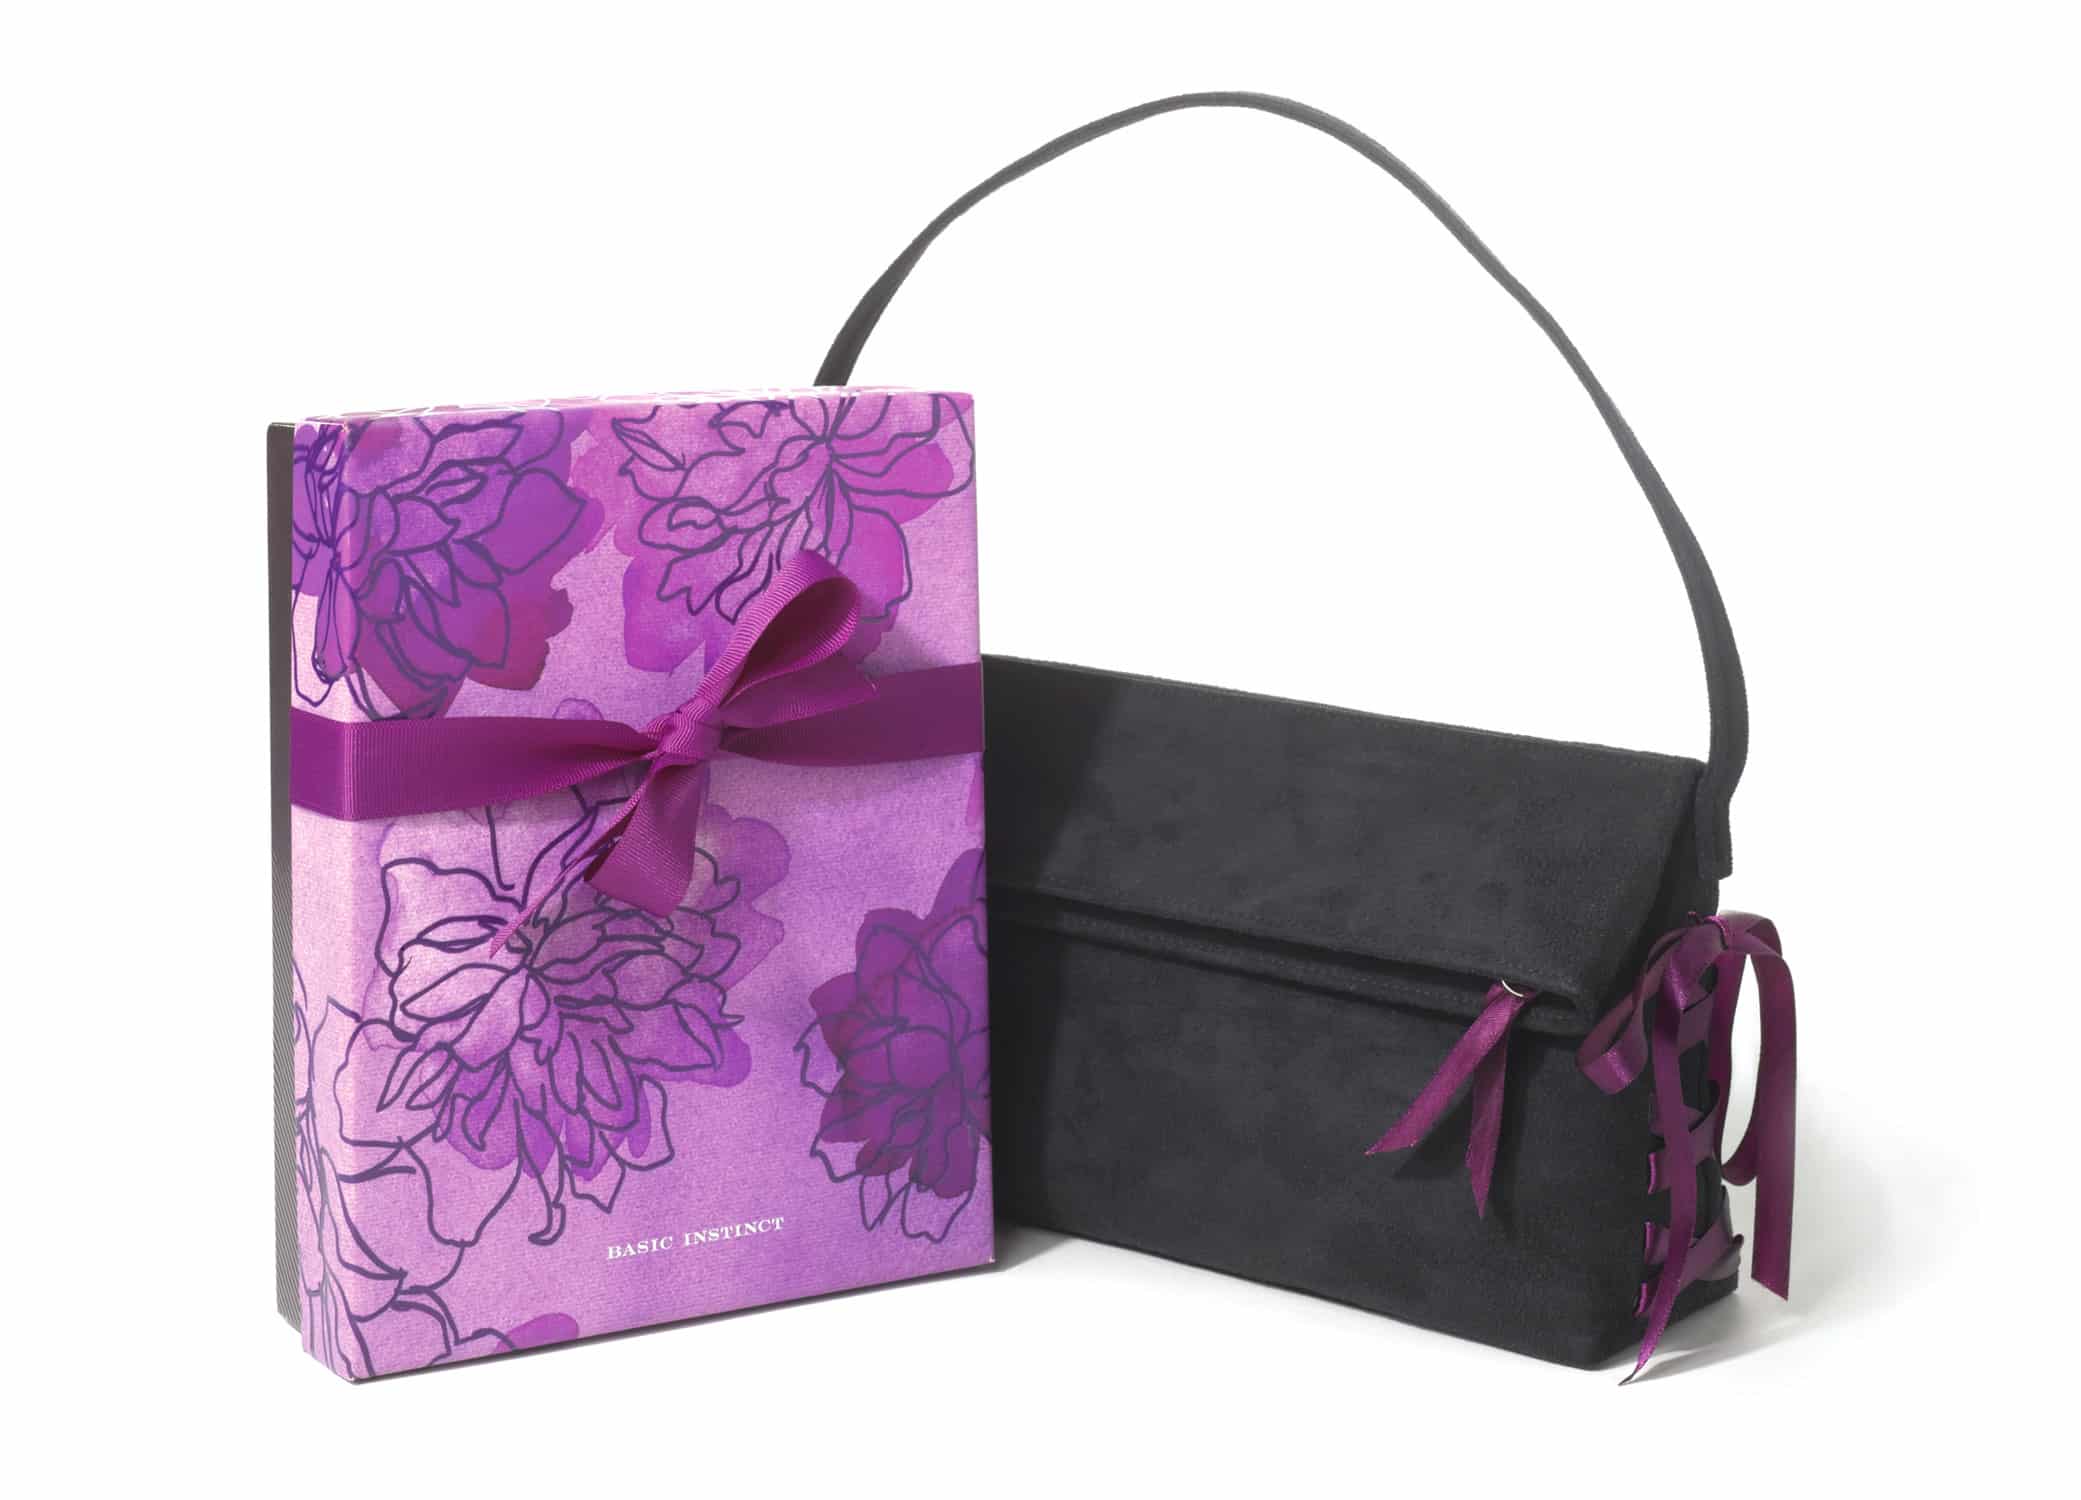 Unique gift boxes packaging design for Victoria's Secret Basic Instinct with black handbag and floral box.